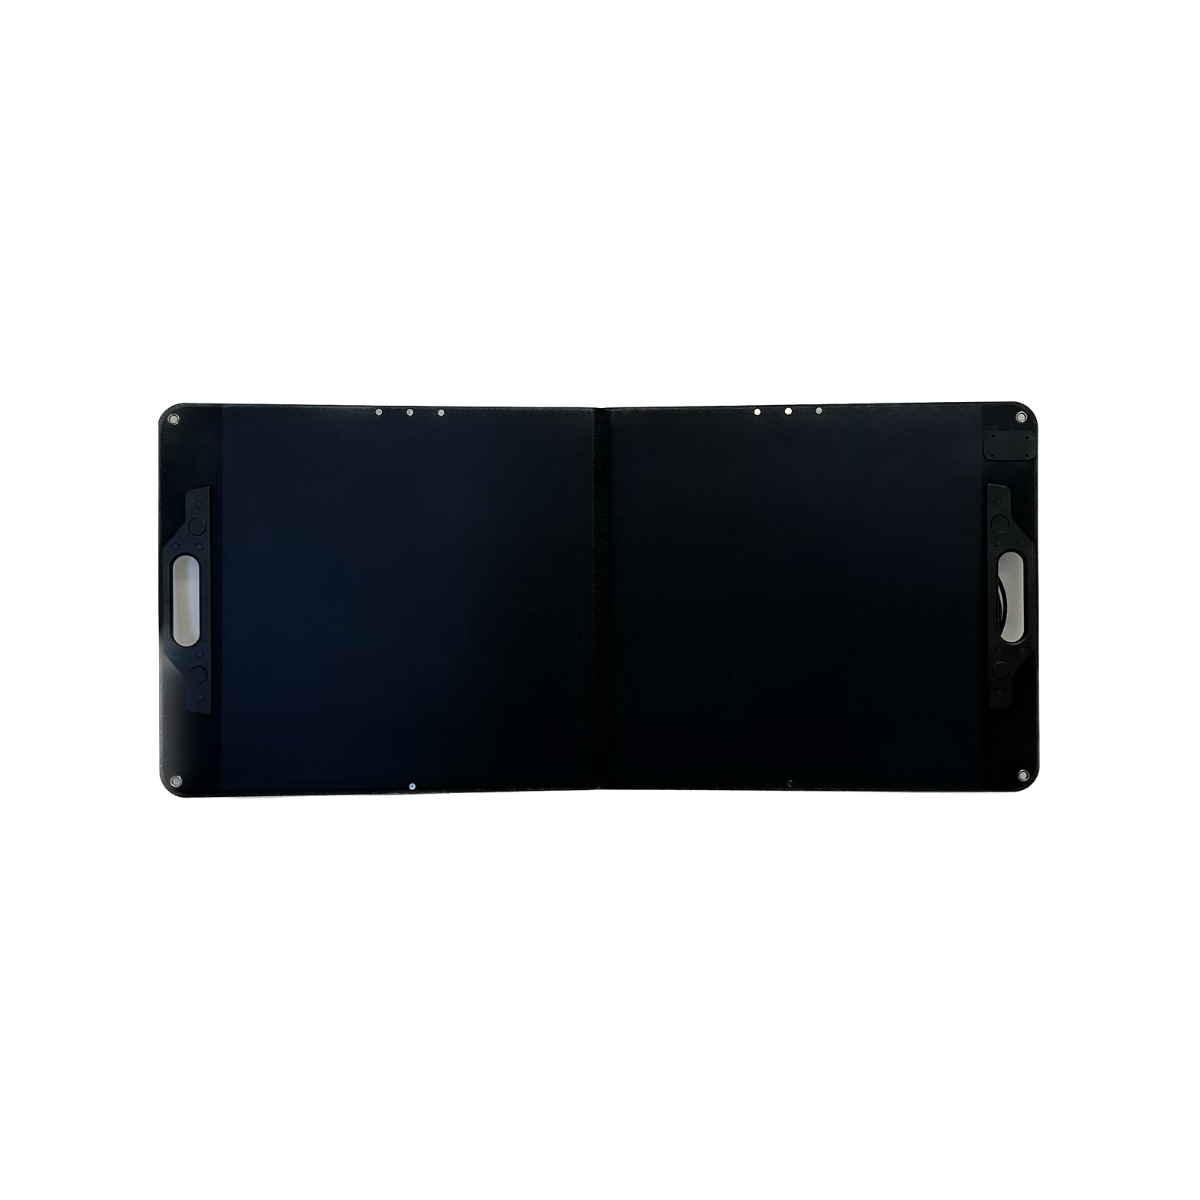 EvoCharge Sunmaster 100W Pro Portable Solar Panel